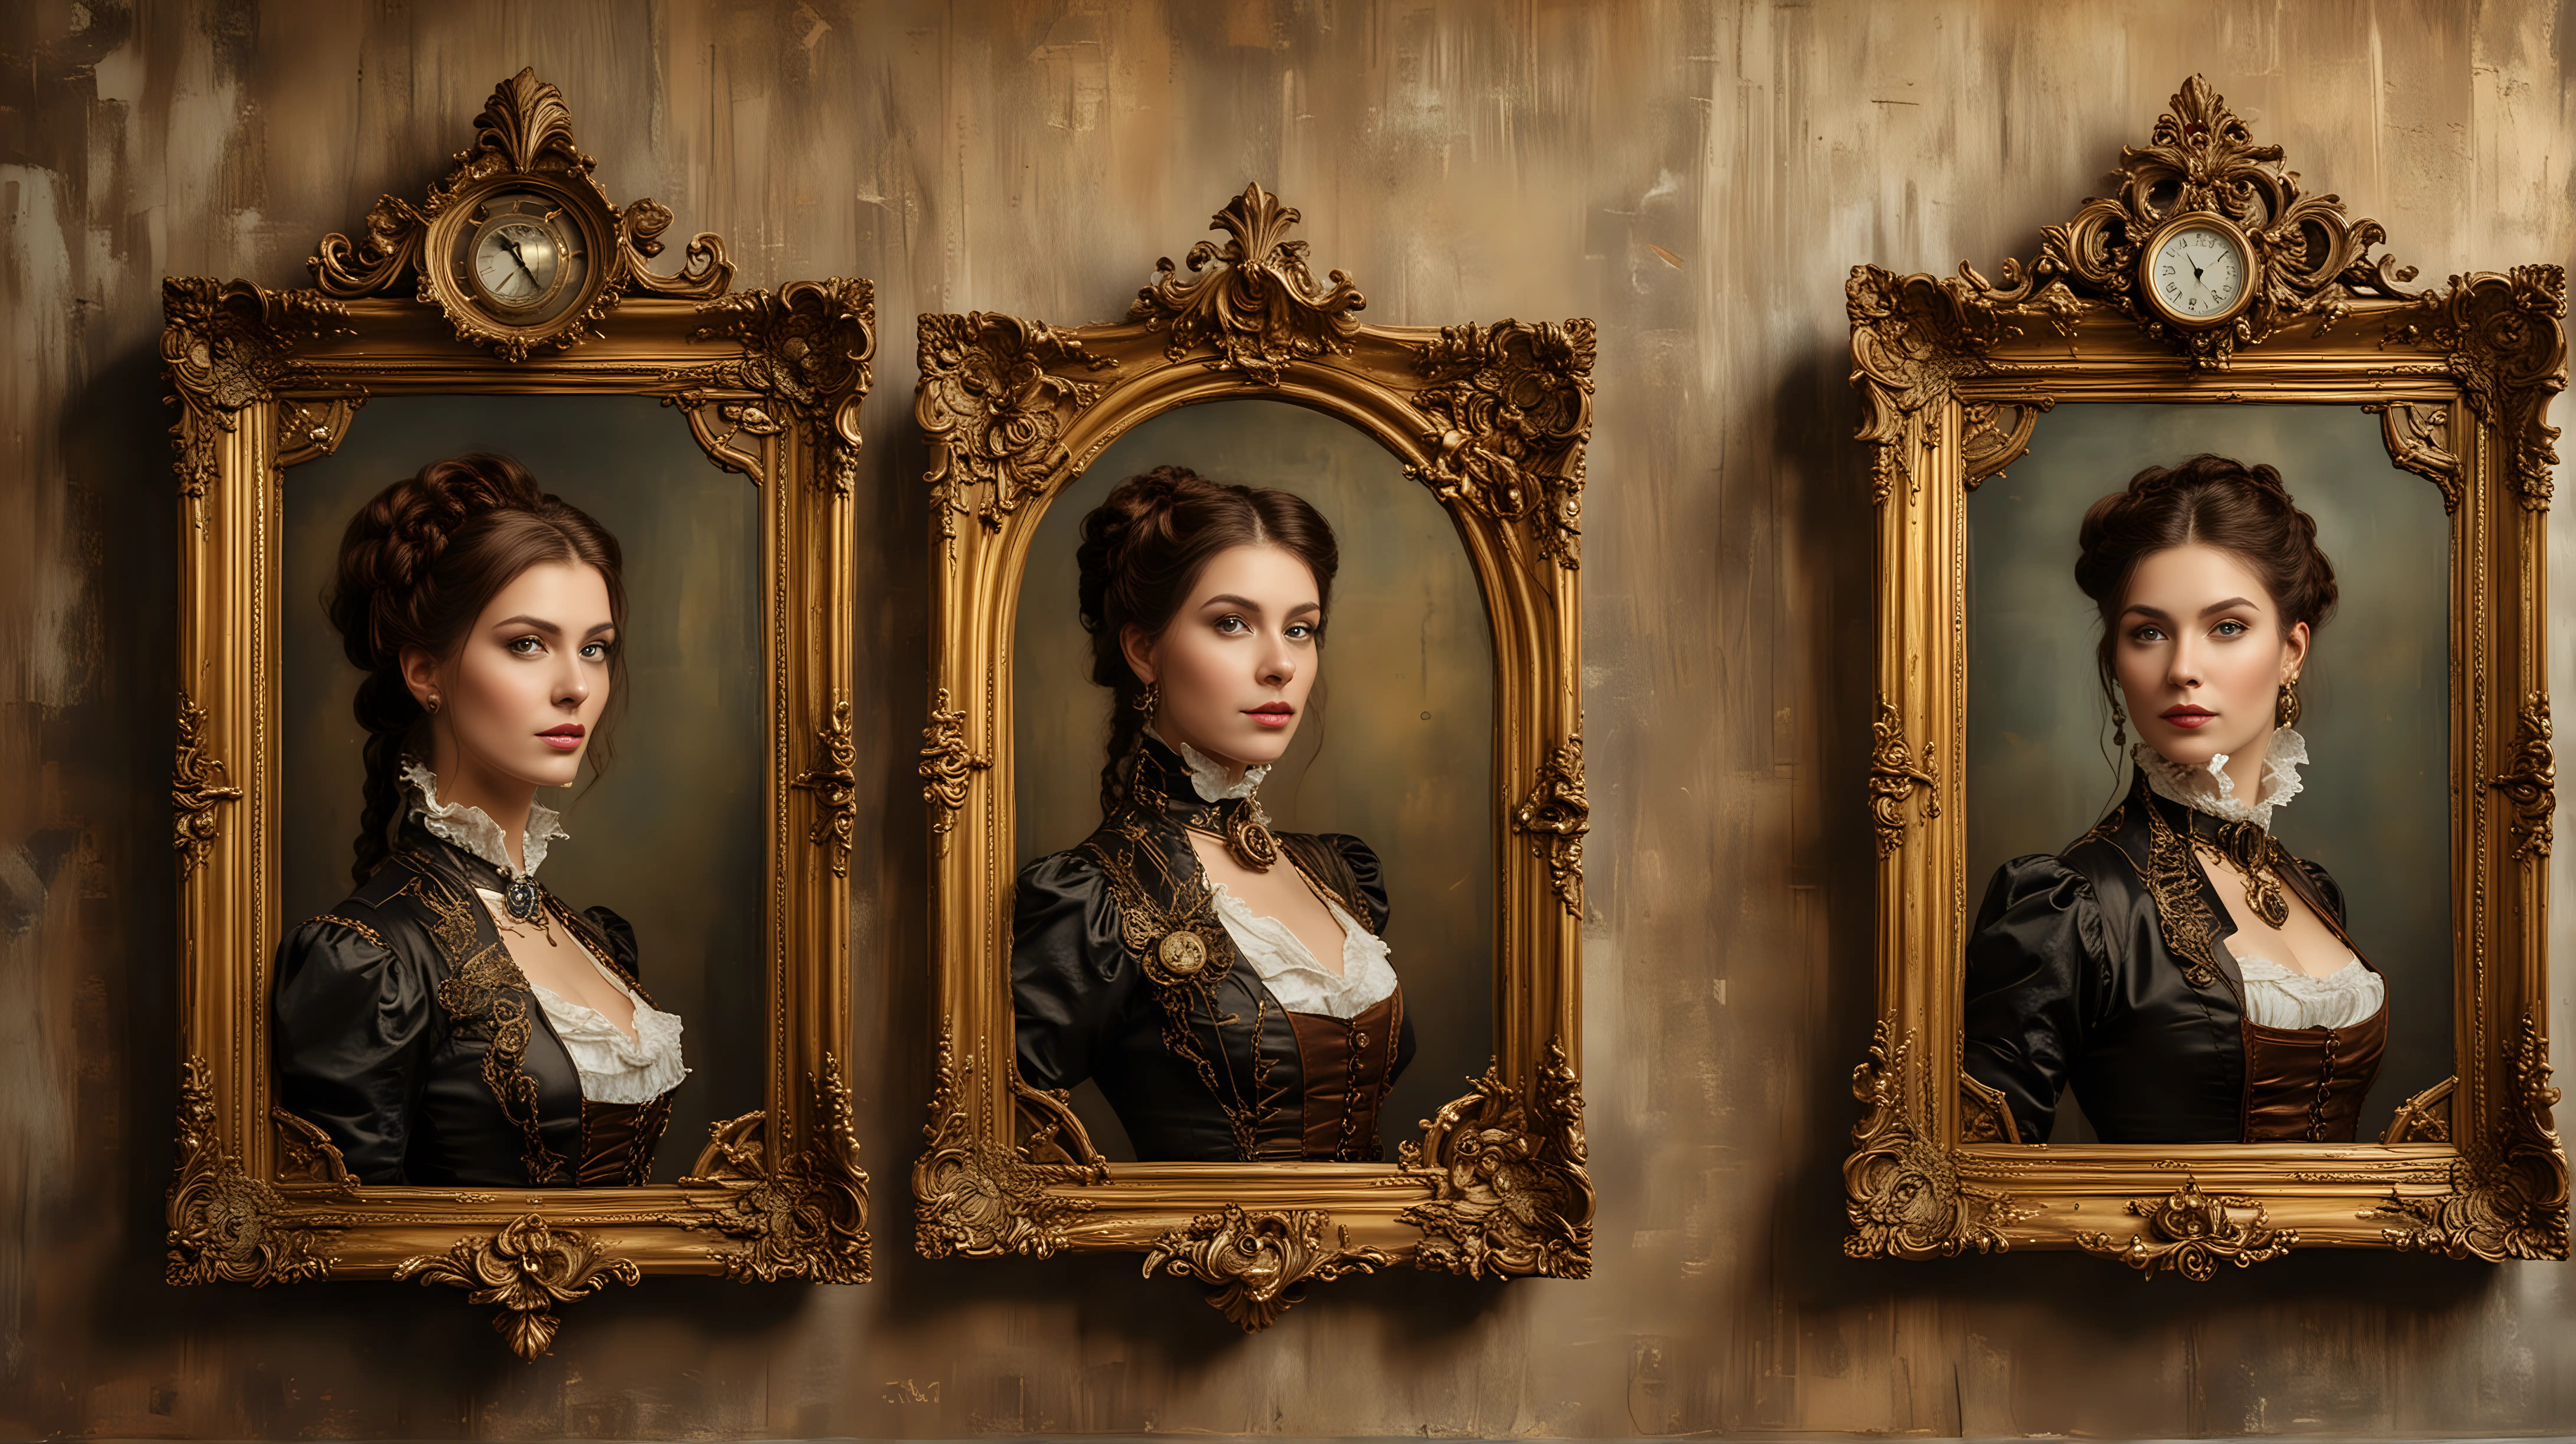 Three Steampunk Noble Women Portraits in Antique Golden Frames